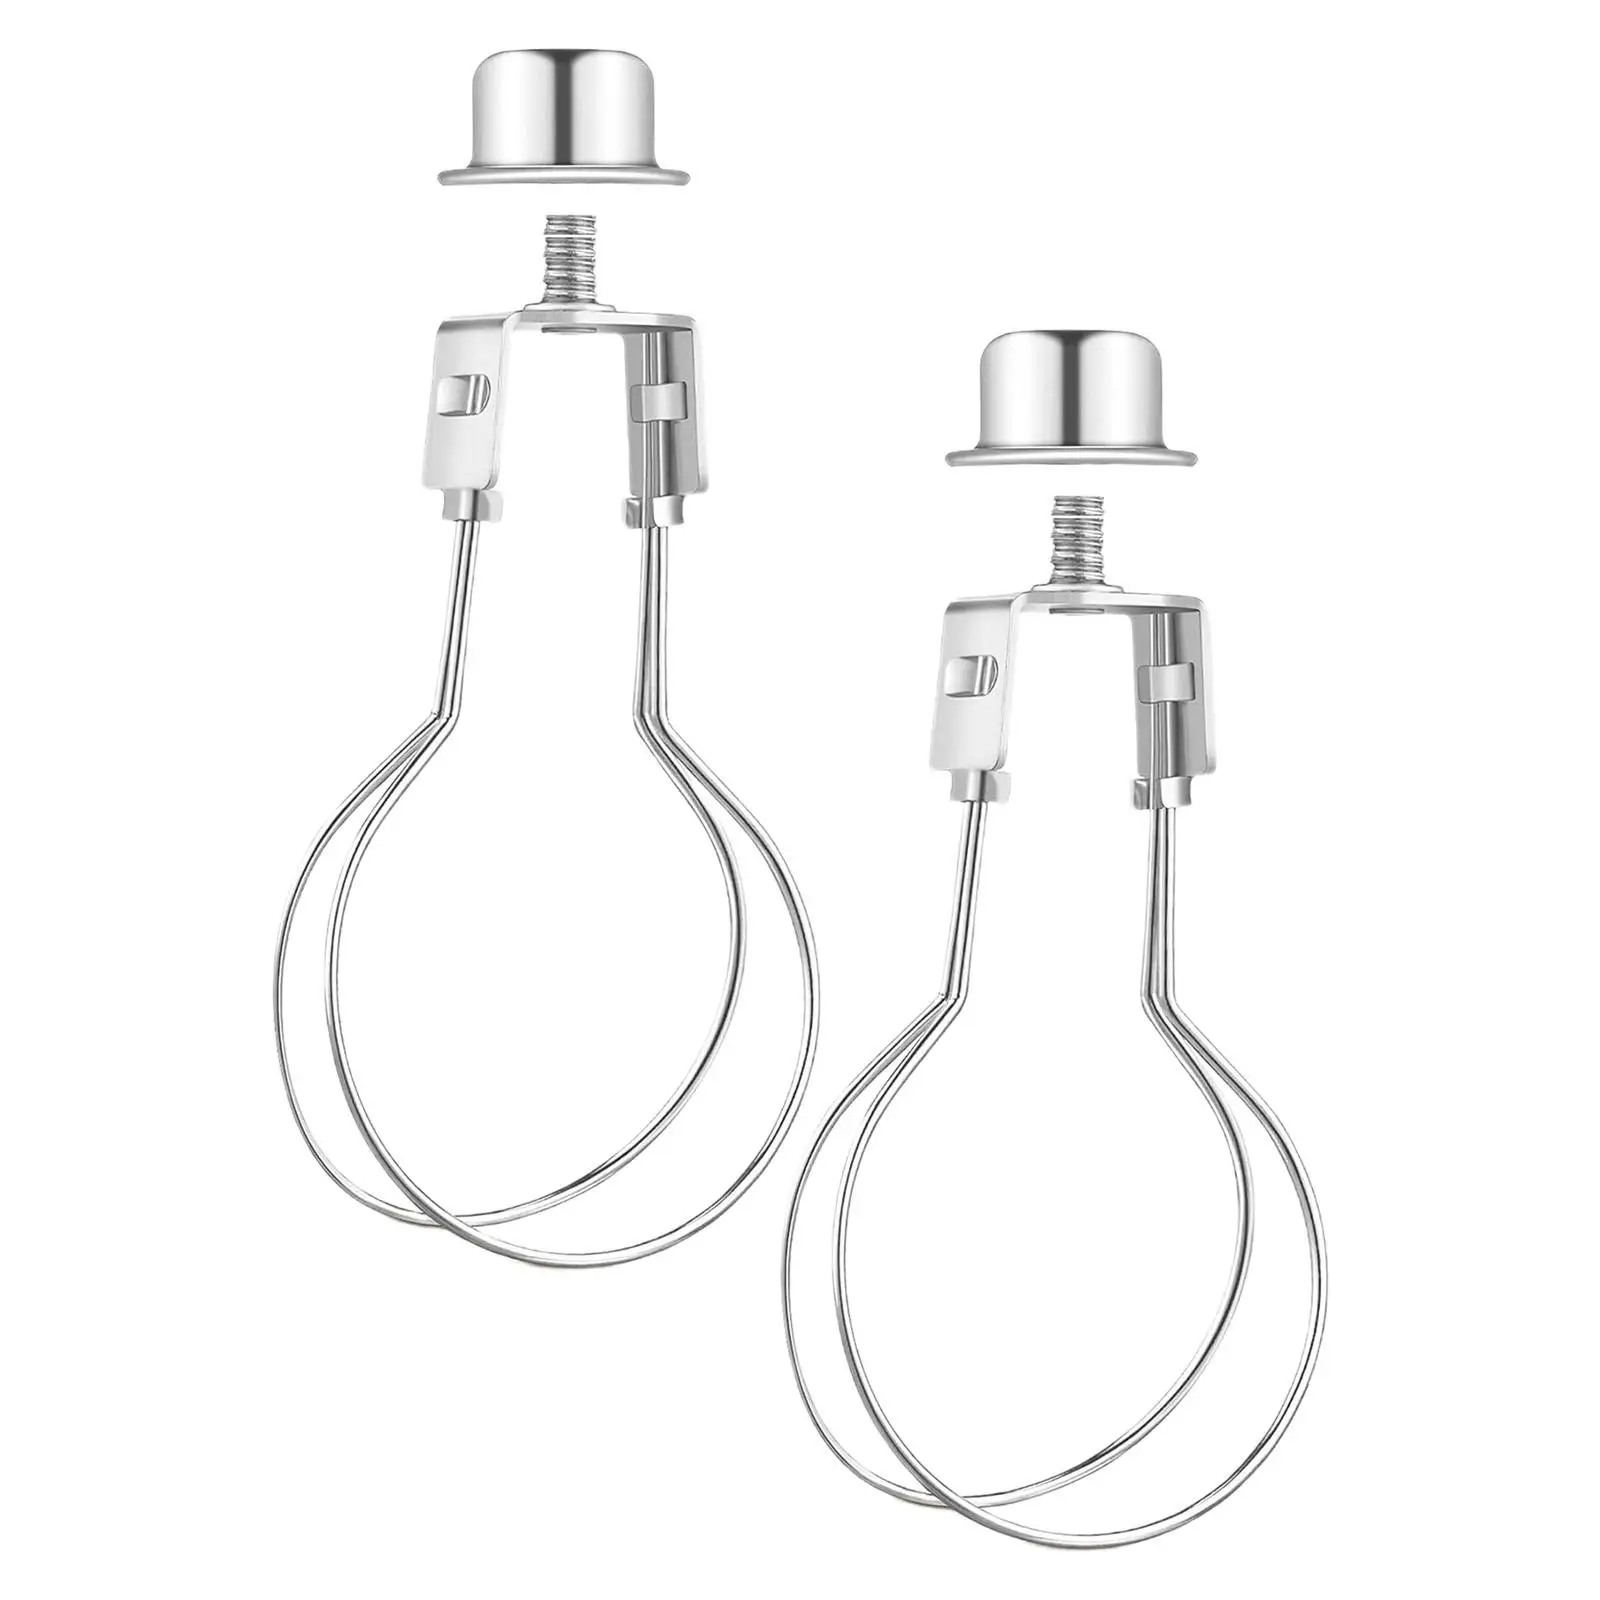 Lamp Shade Lights Bulb Clip Adapter Attaching Finial Top,Standard Size Bulbs